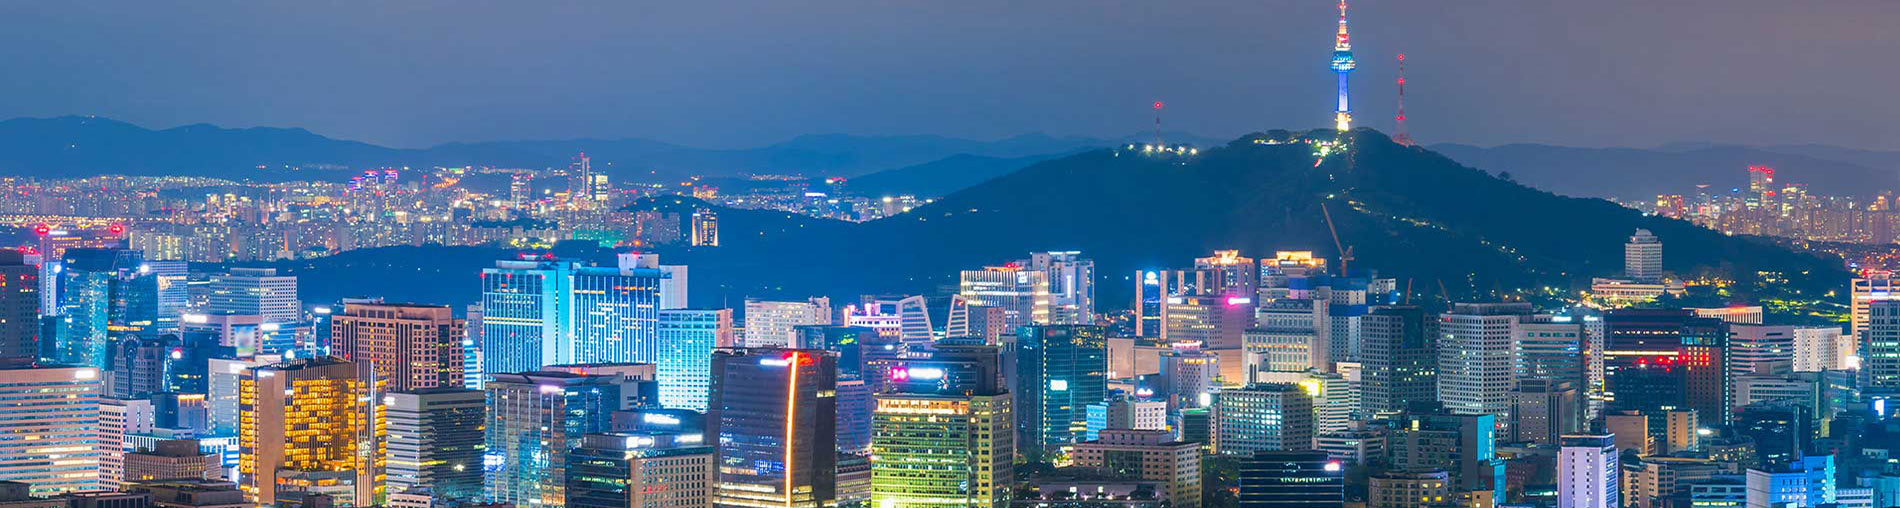 Korea Holiday Package - 7 Nights